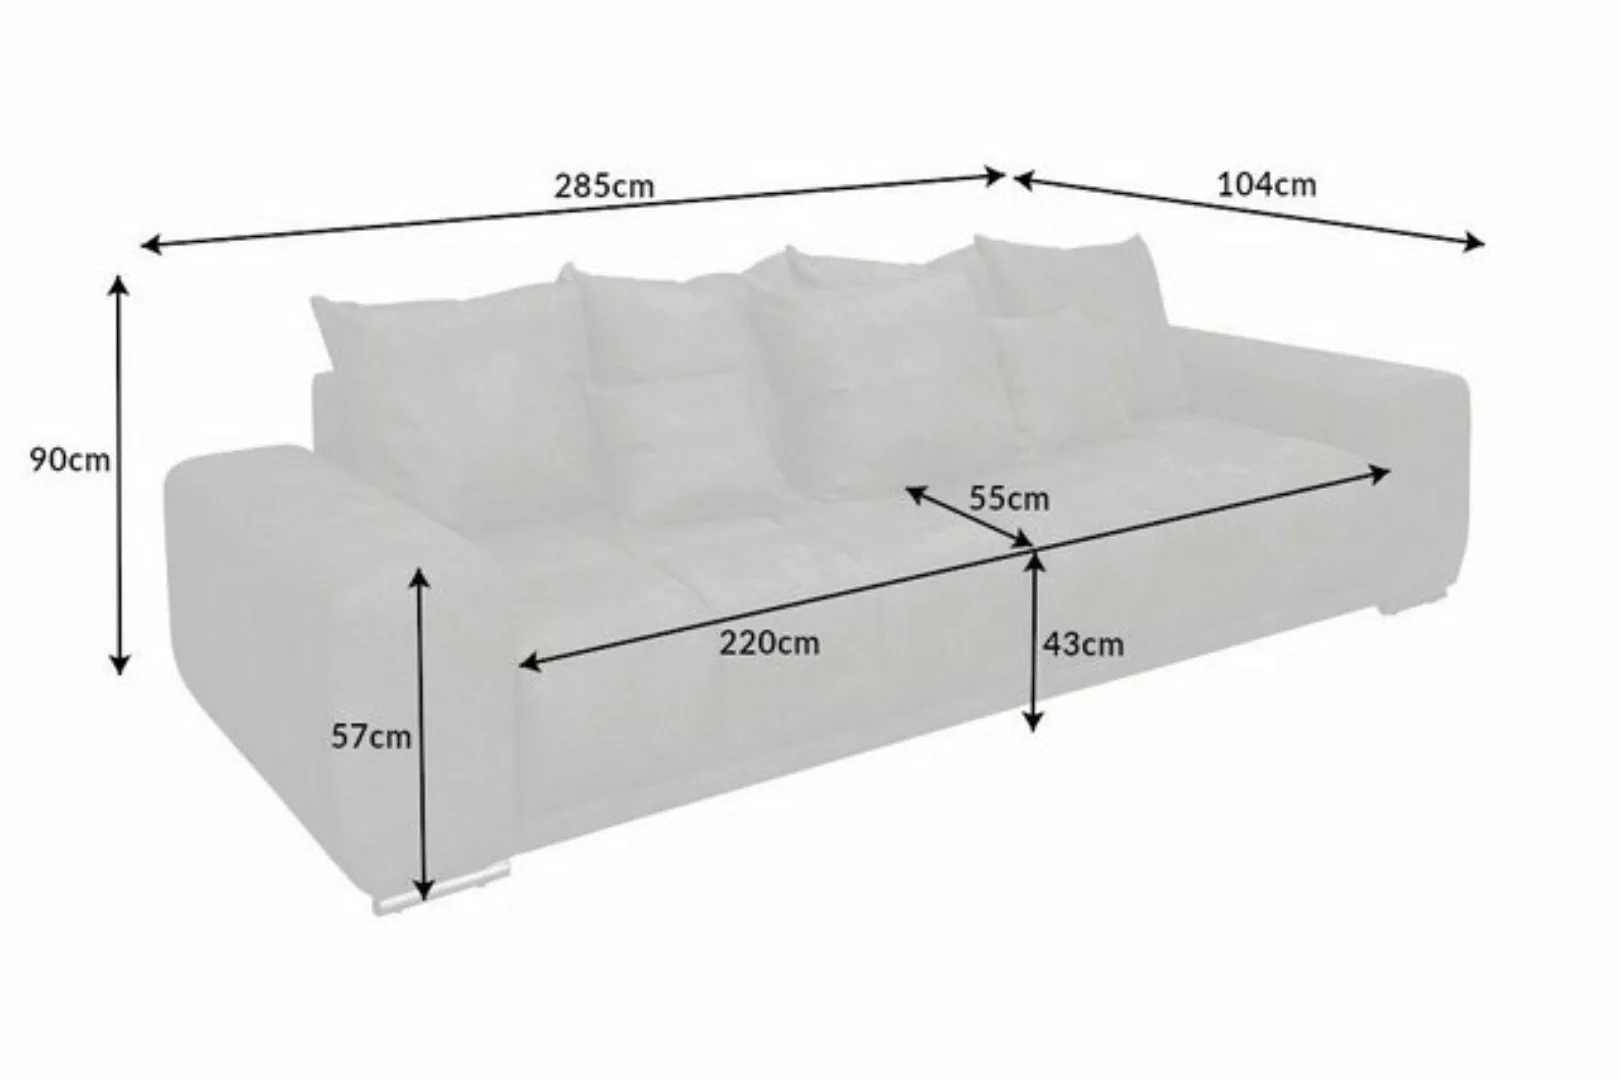 riess-ambiente Big-Sofa ELEGANCIA 285cm grau, Einzelartikel 1 Teile, XXL Co günstig online kaufen